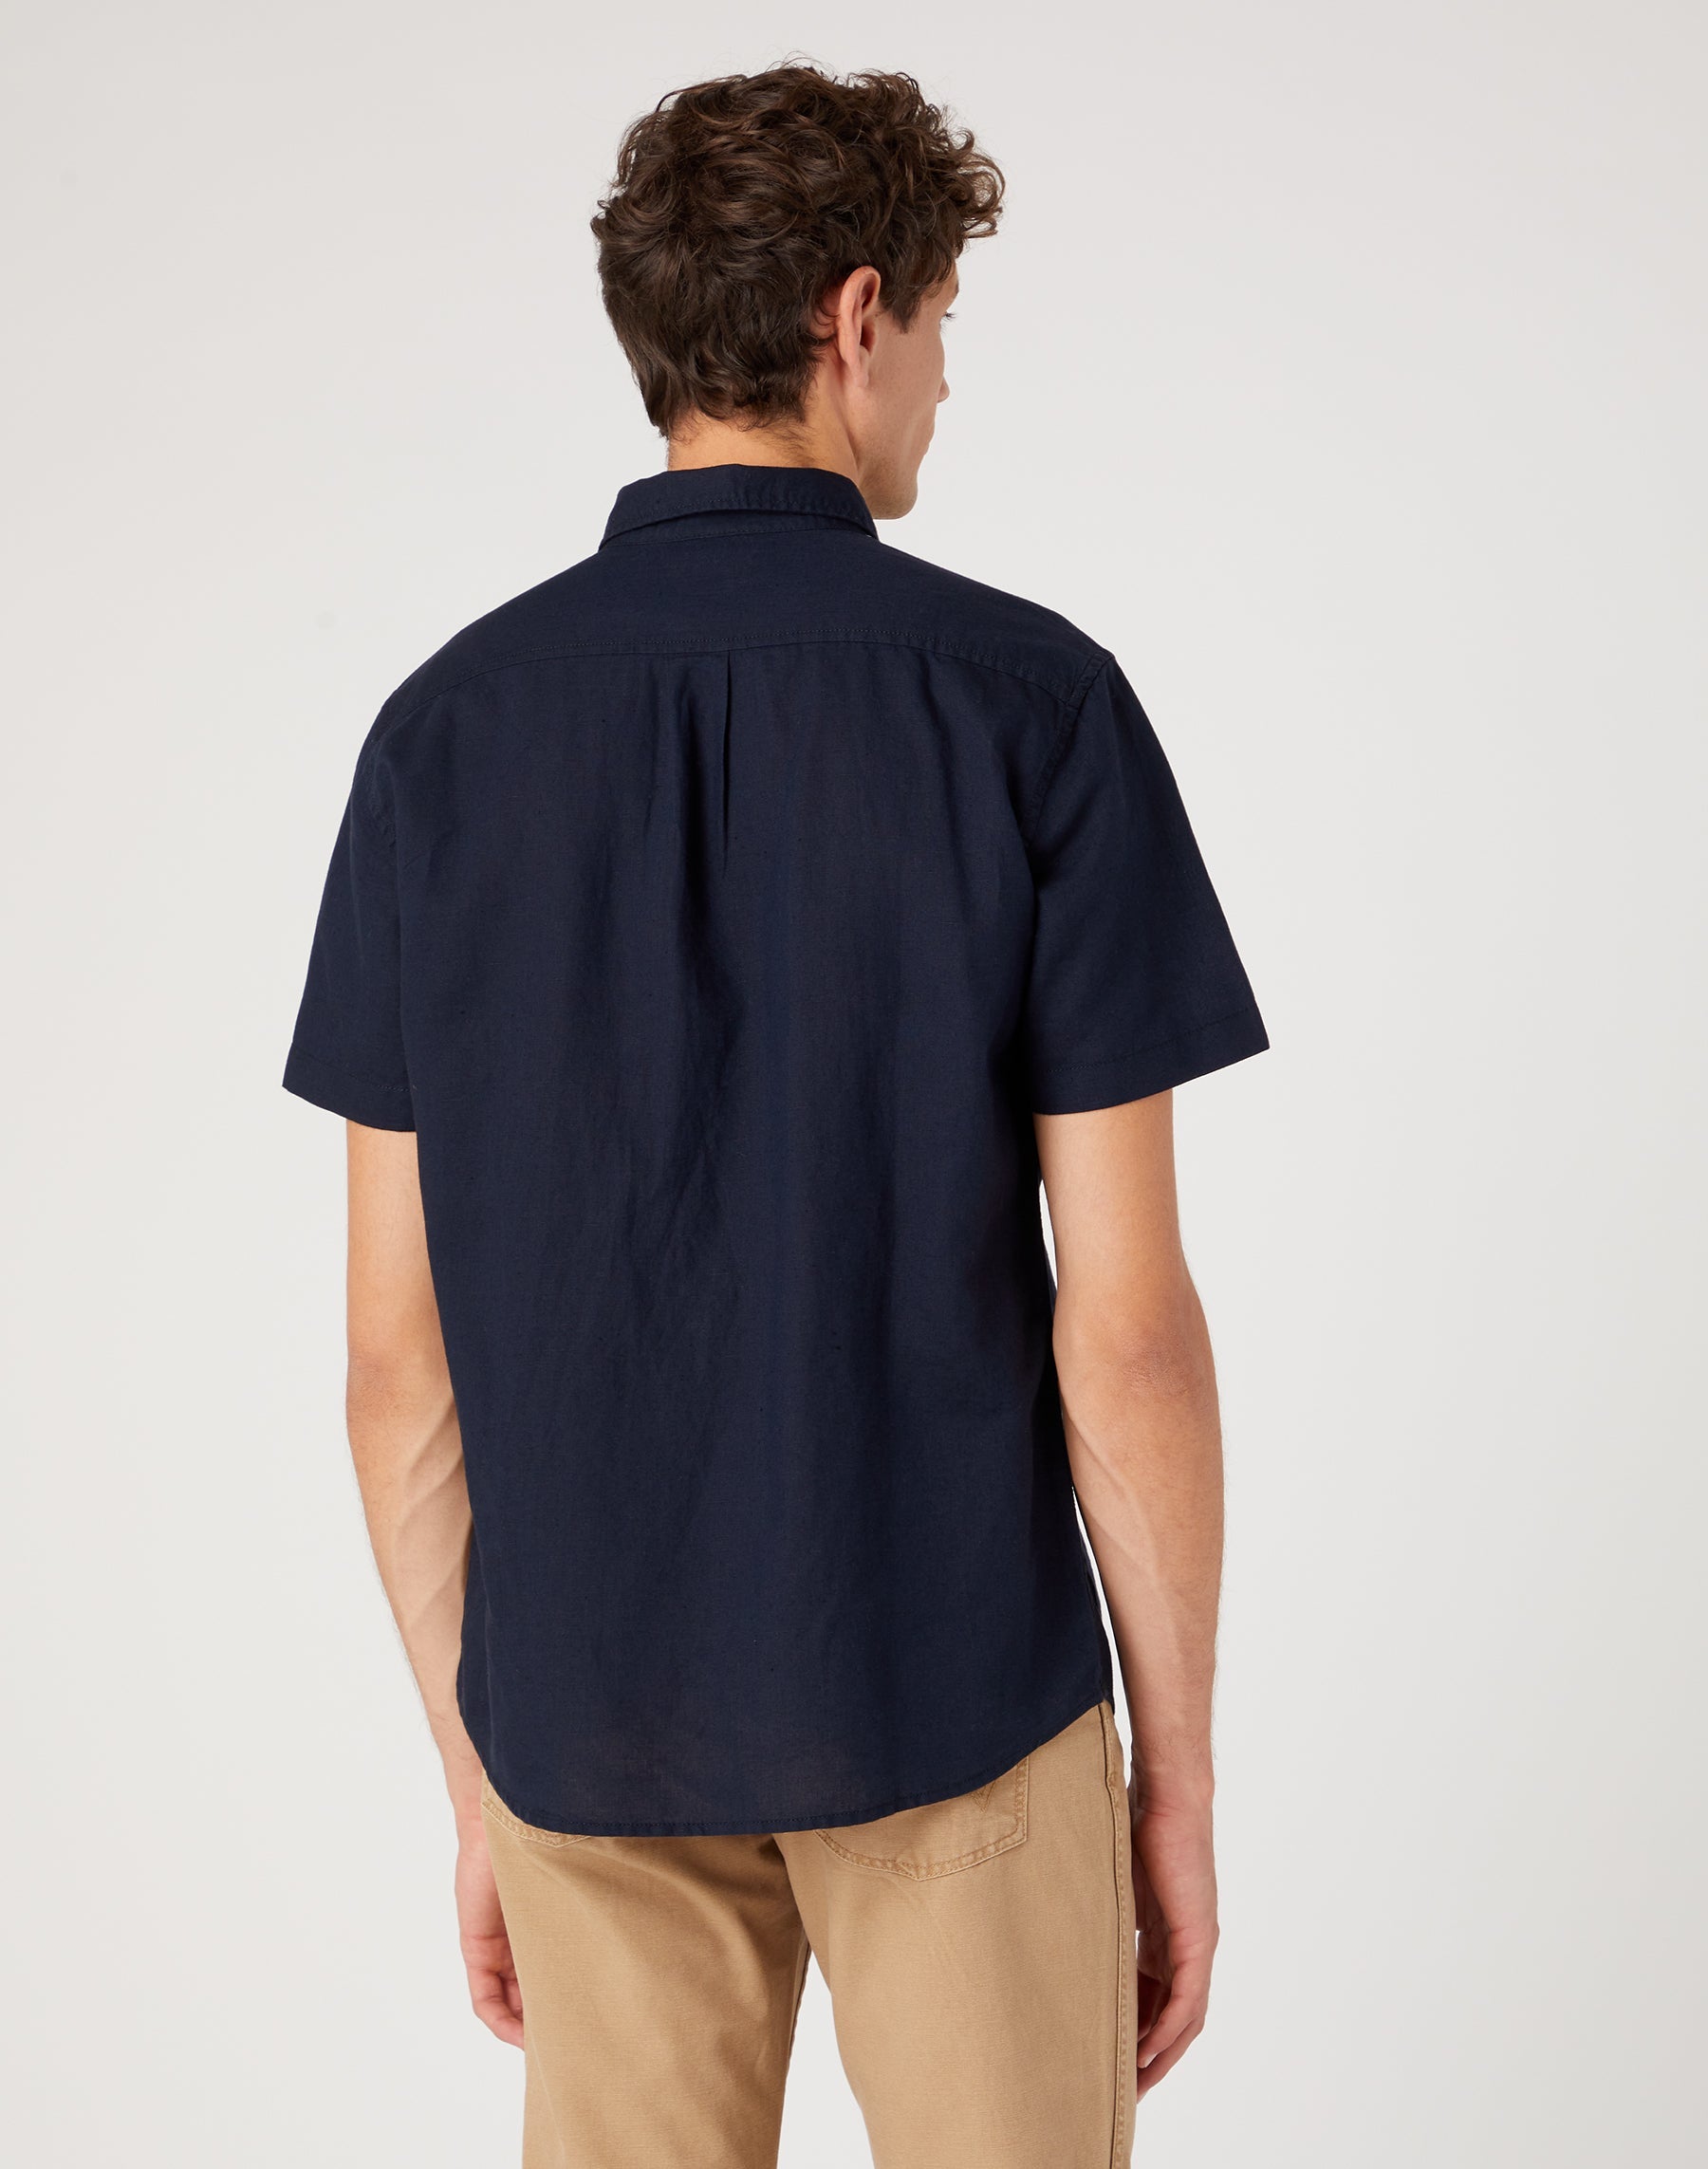 Kurzarm One Pocket Shirt in Dark Navy Hemden Wrangler   